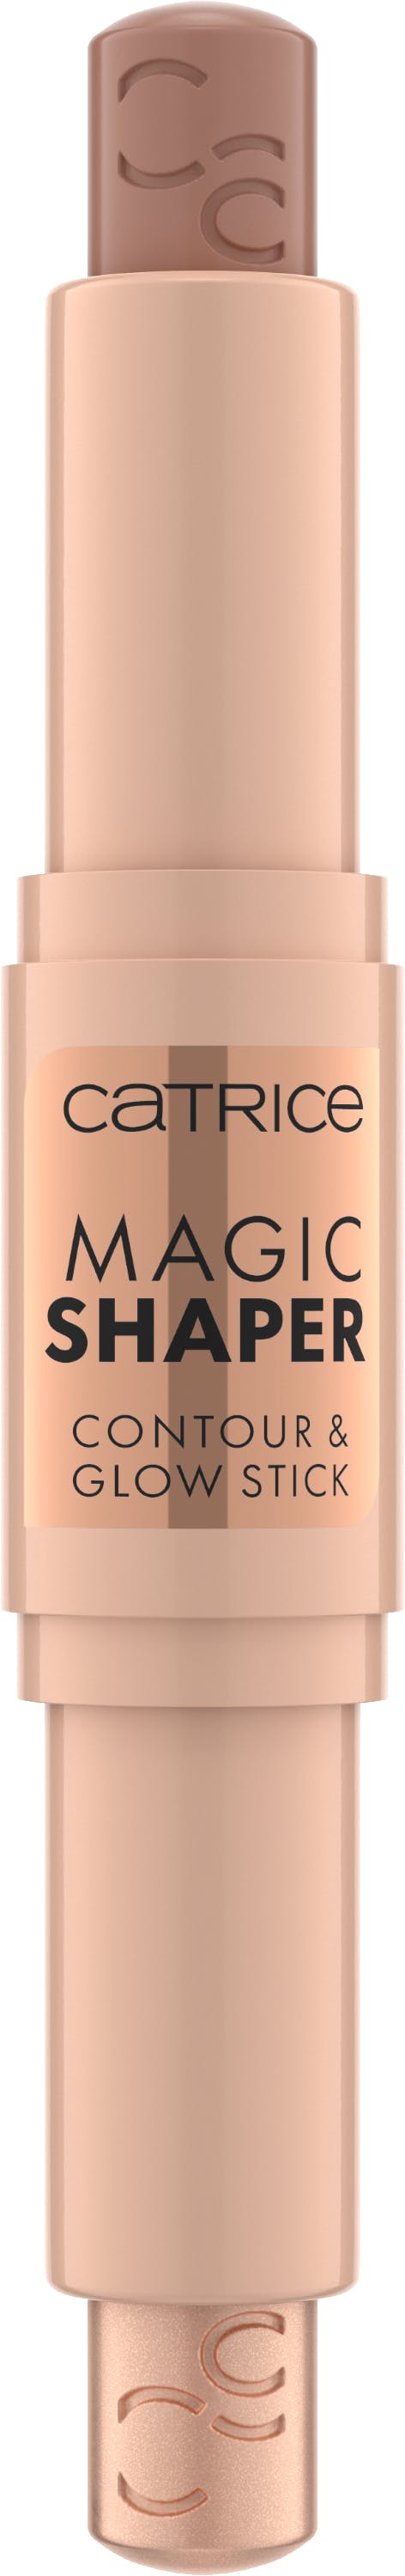 Catrice Magic Shaper Contour & Glow Stick 010 9 g - £4.99